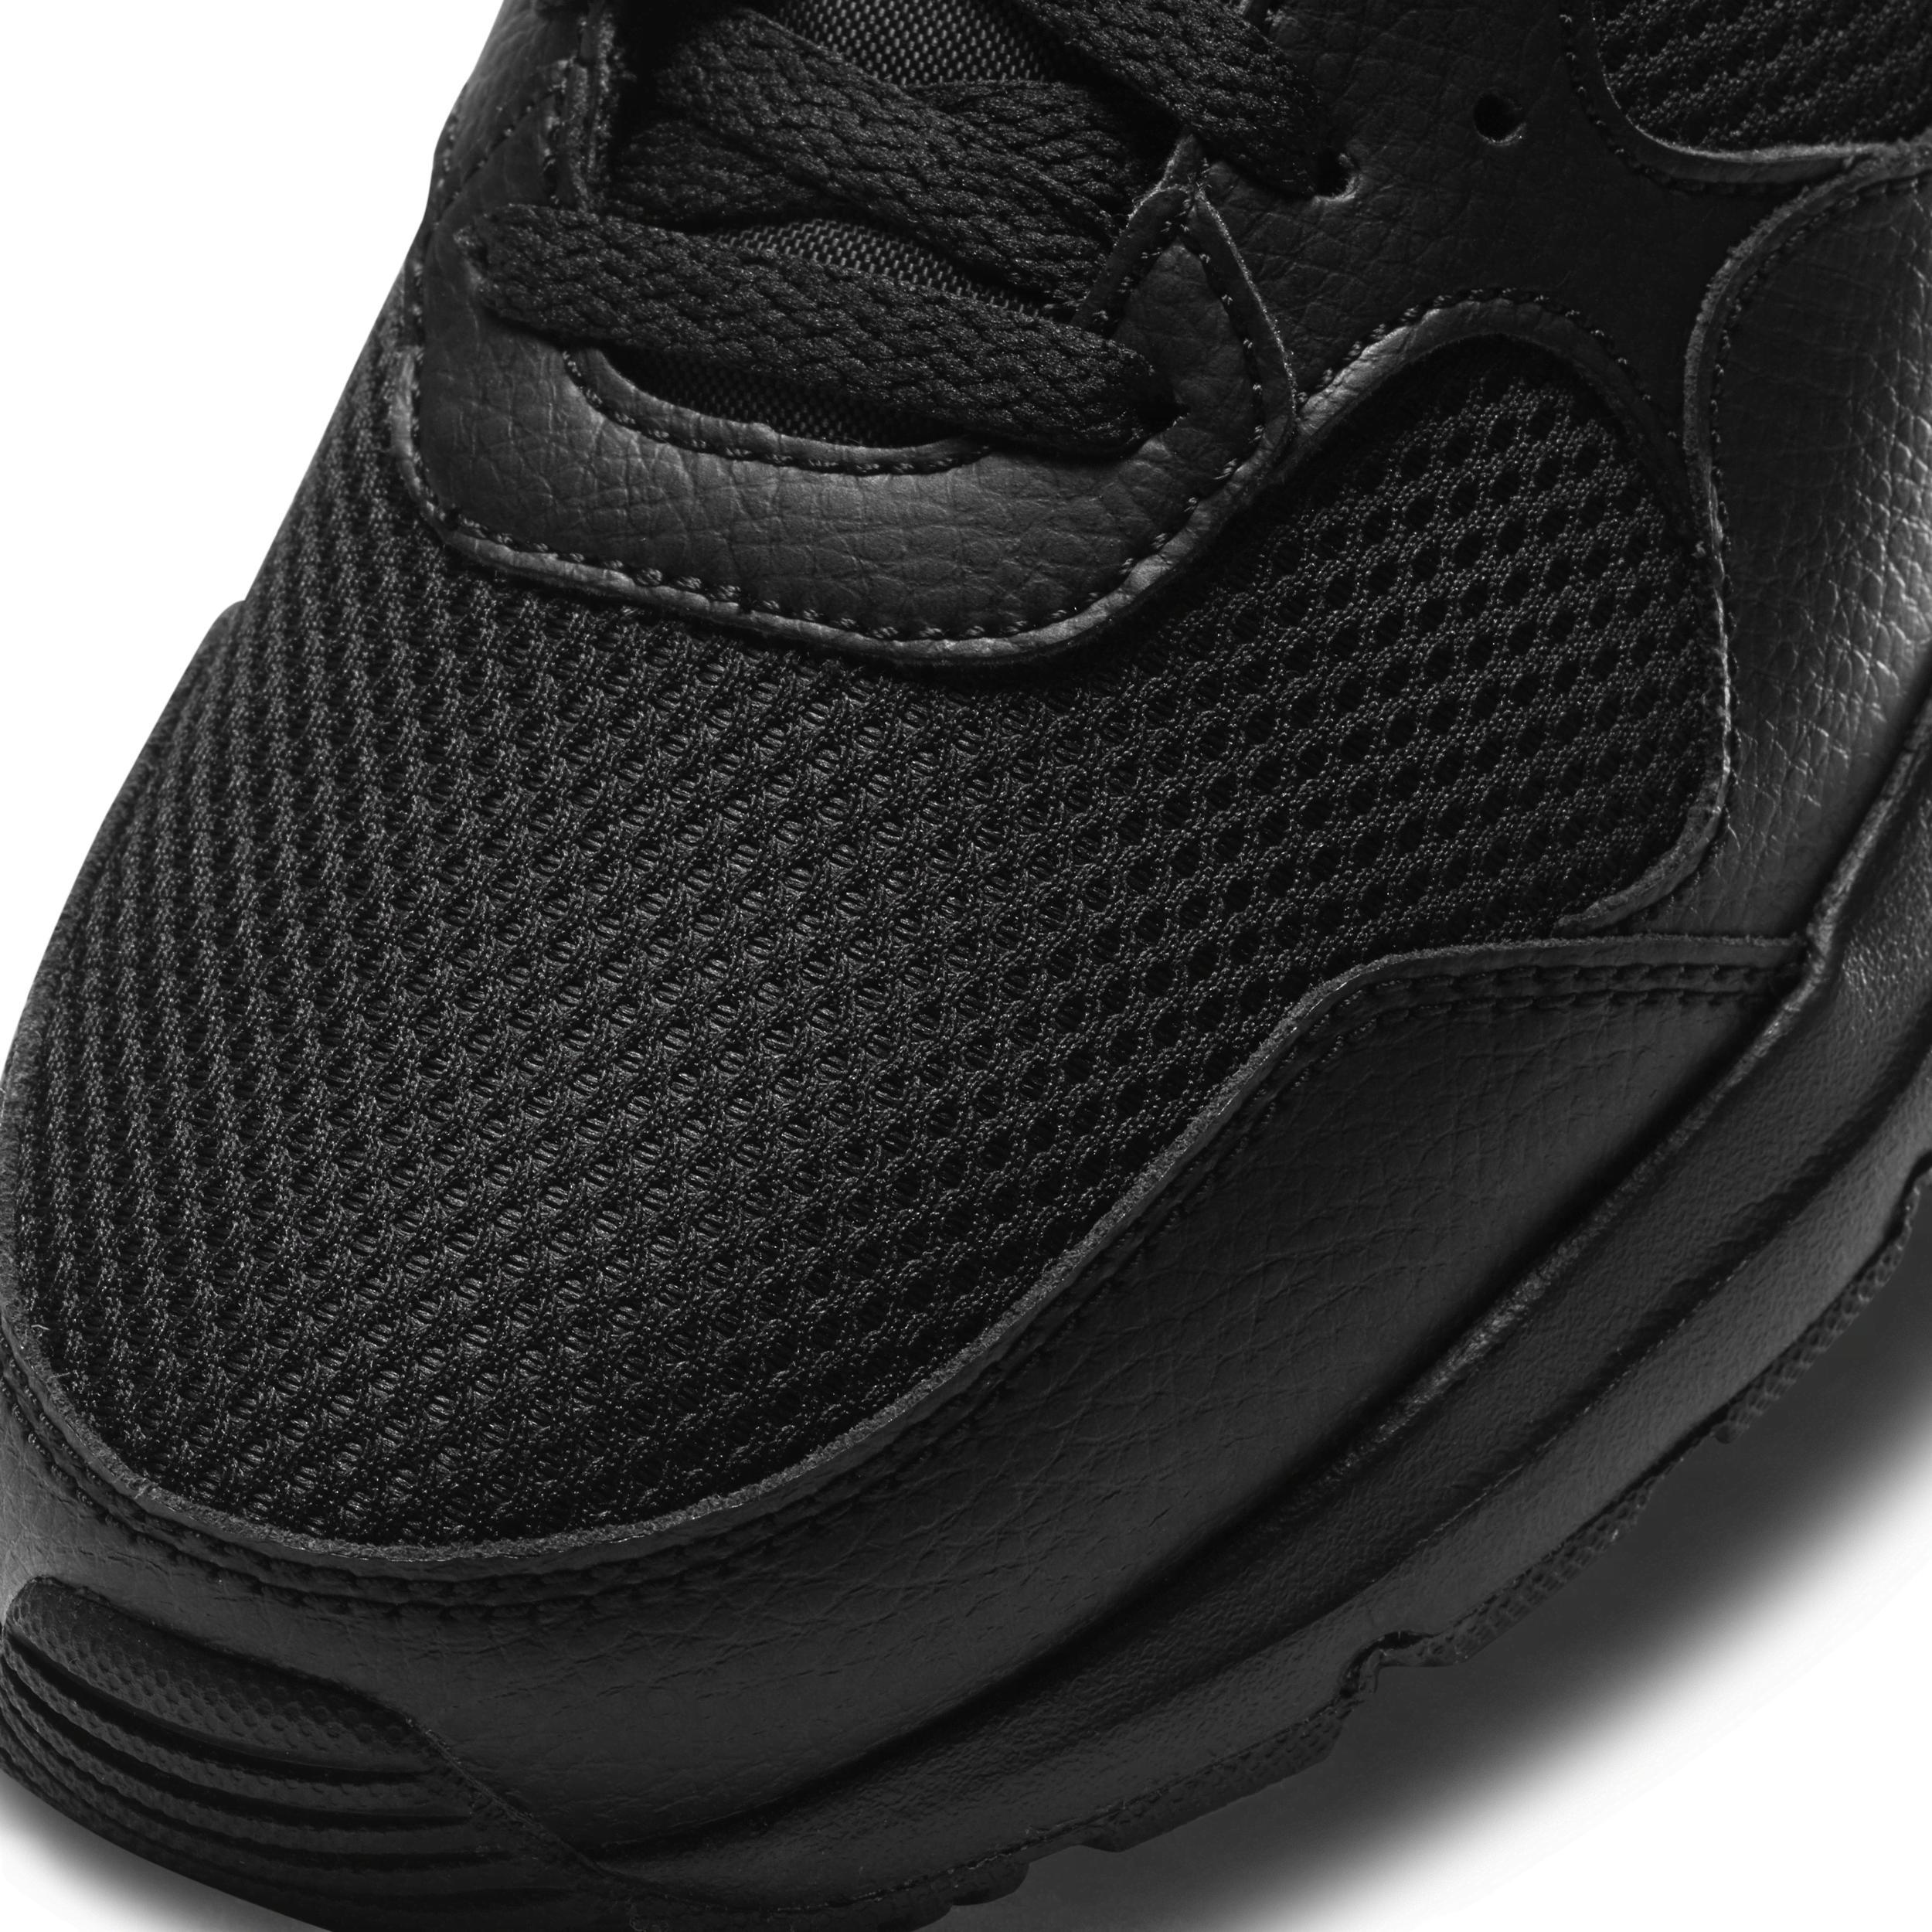 Nike Mens Nike Air Max SC - Mens Running Shoes Black/Black Product Image